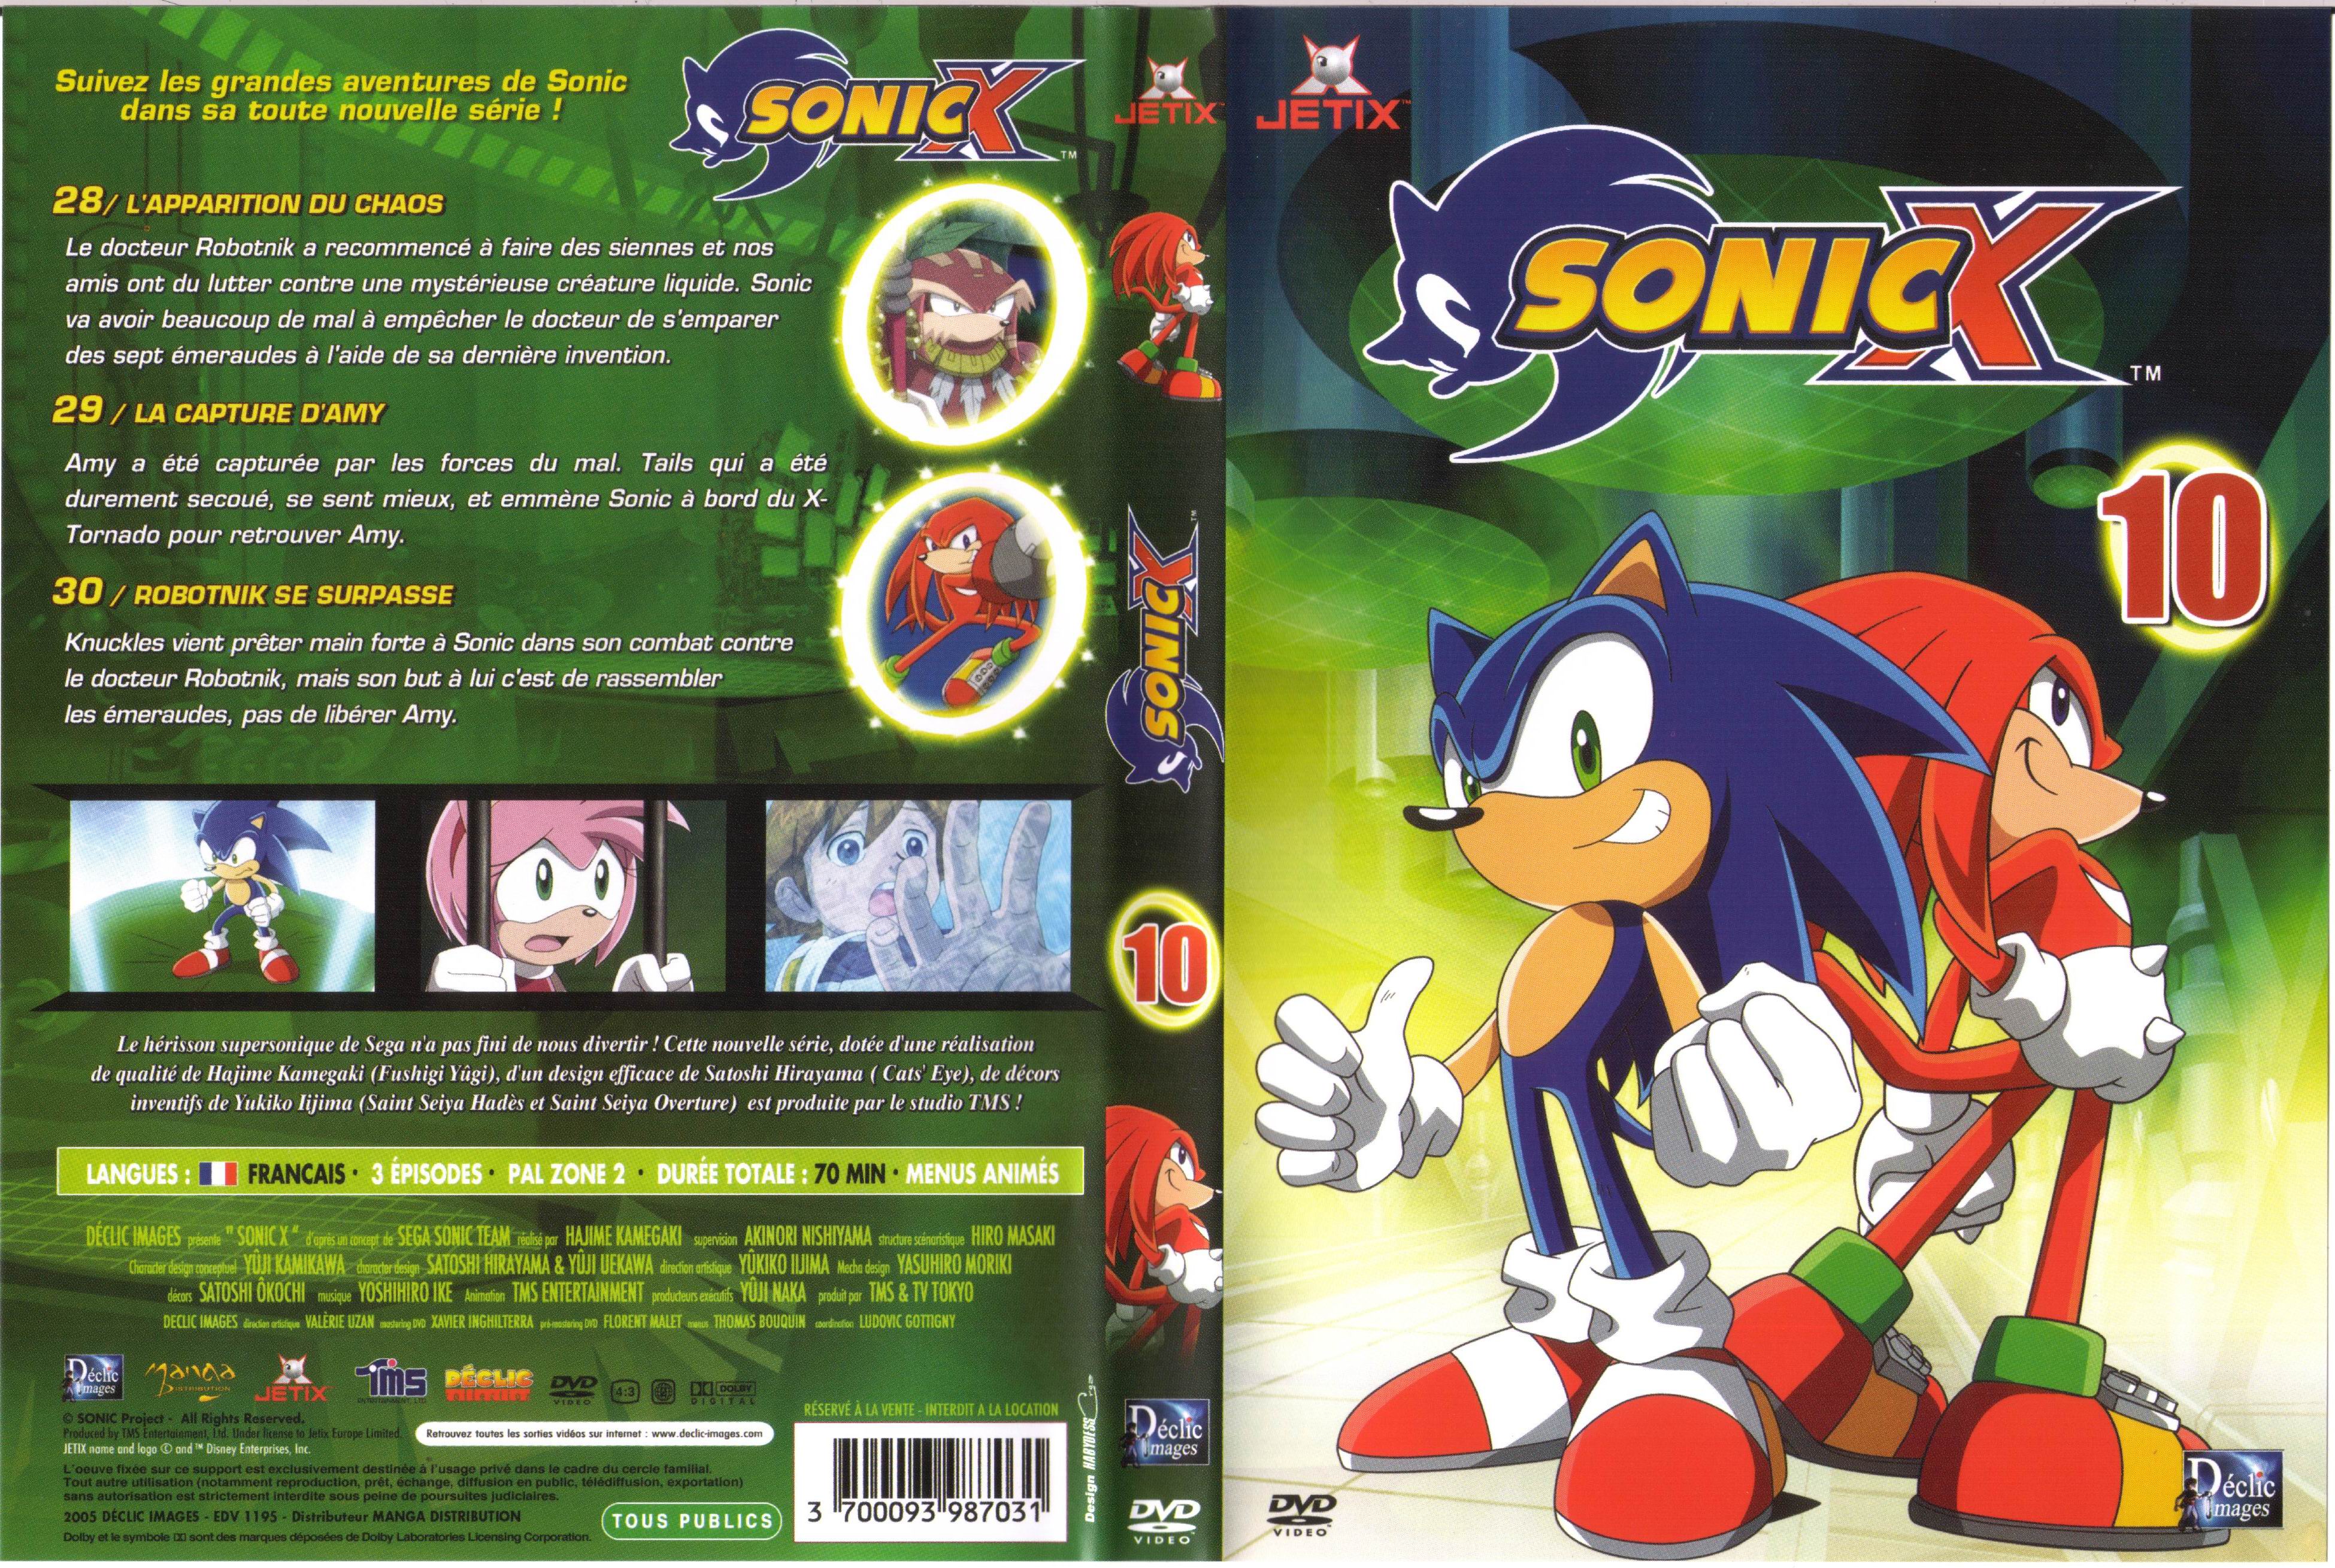 Jaquette DVD Sonic X vol 10